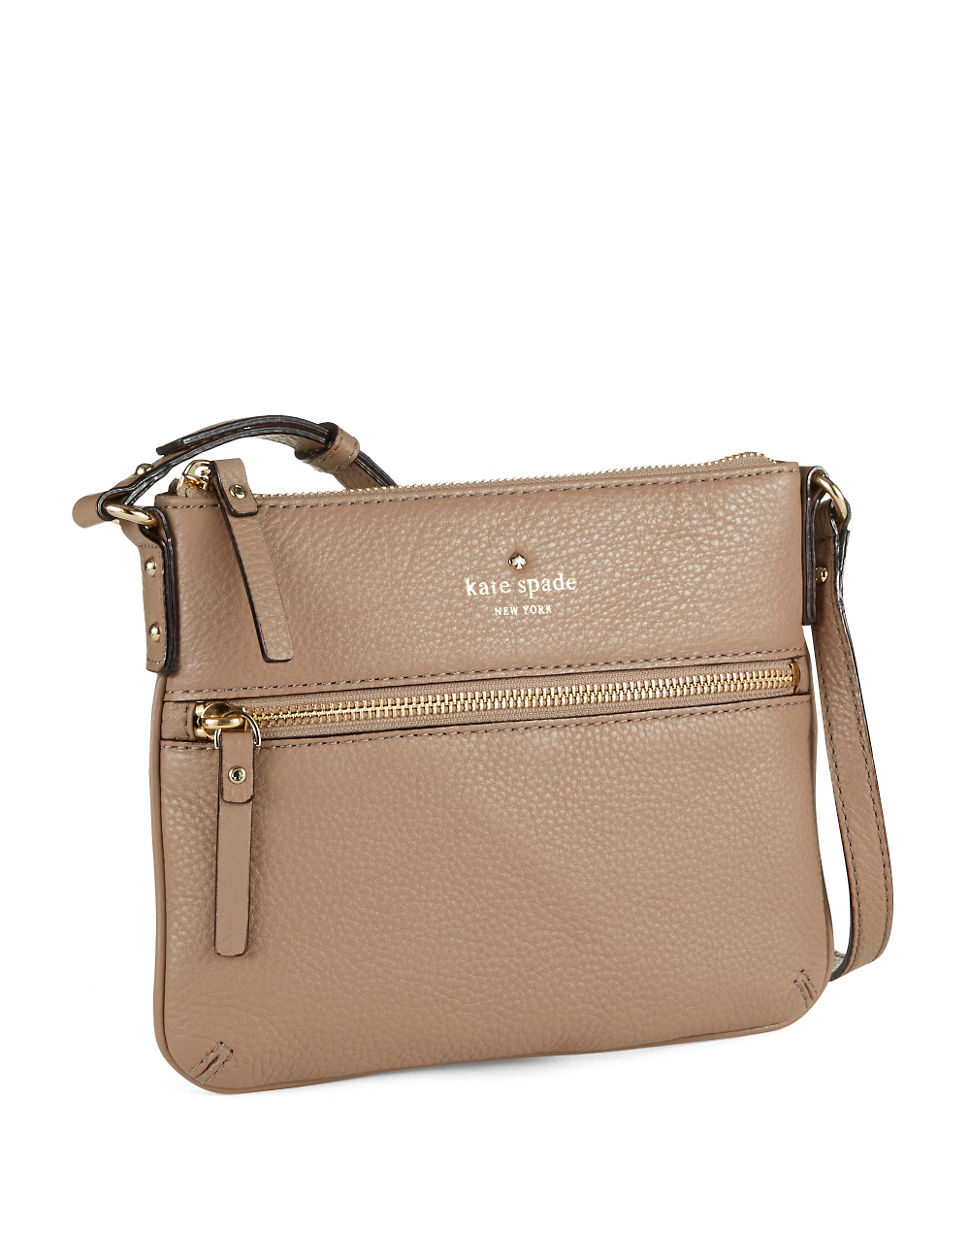 Kate Spade Tenley Leather Crossbody Bag in Brown - Lyst